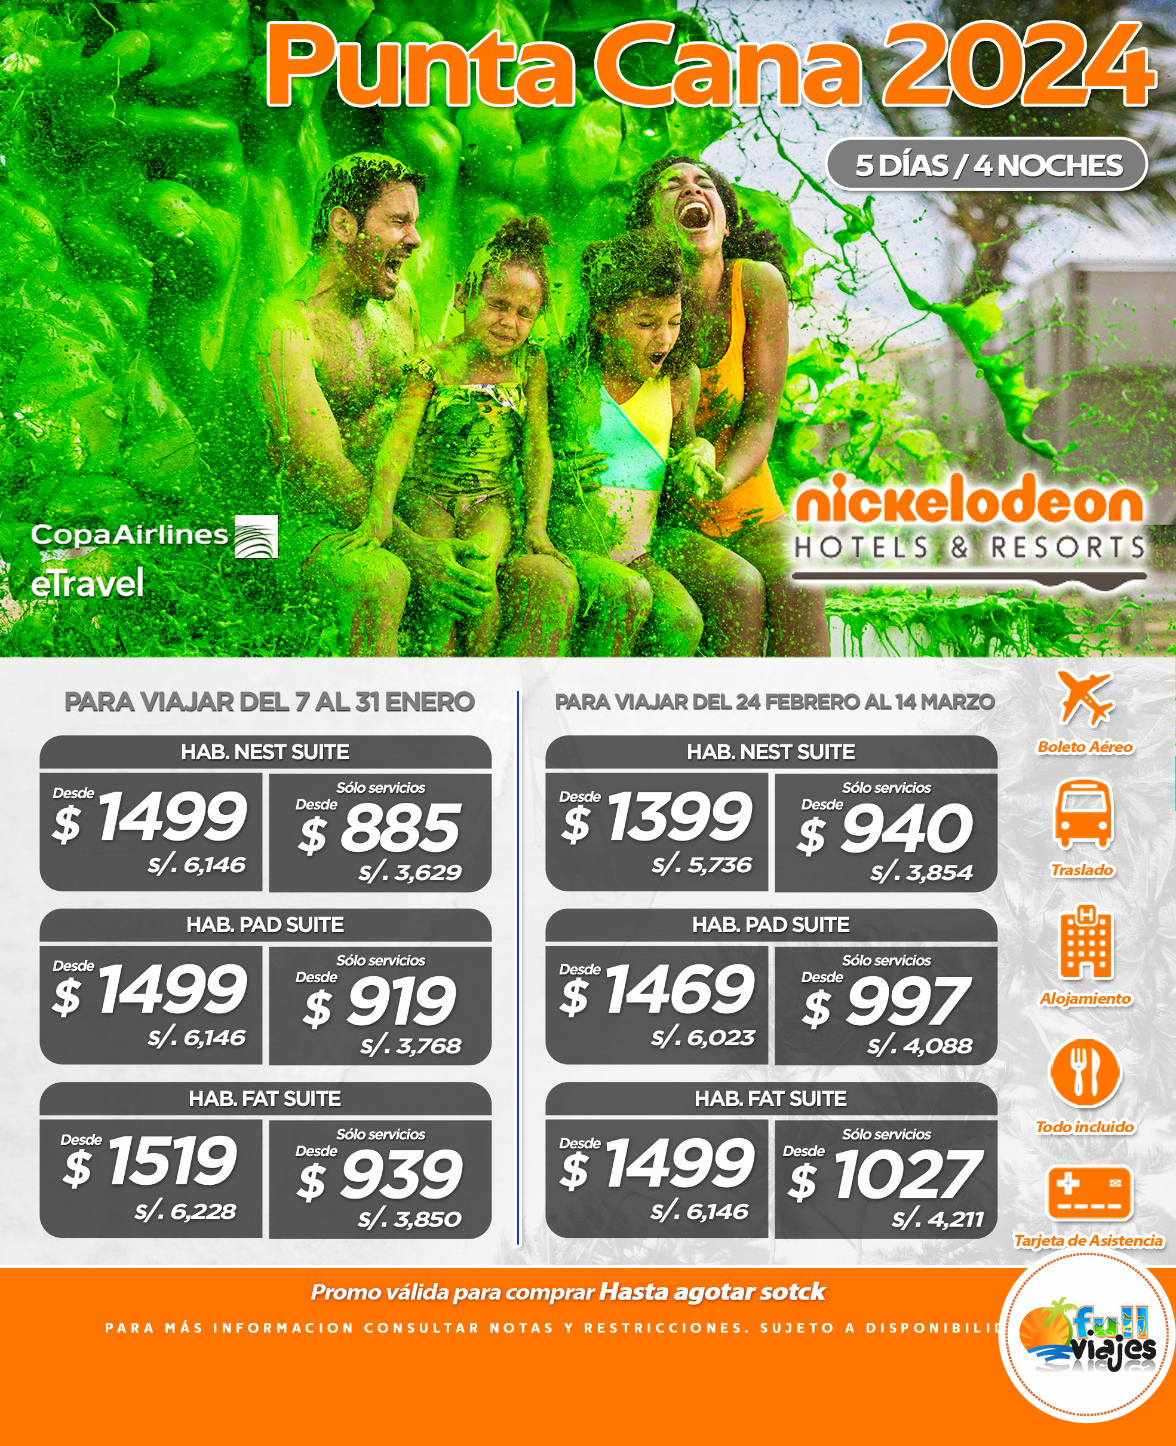 Punta Cana con Nickelodeon